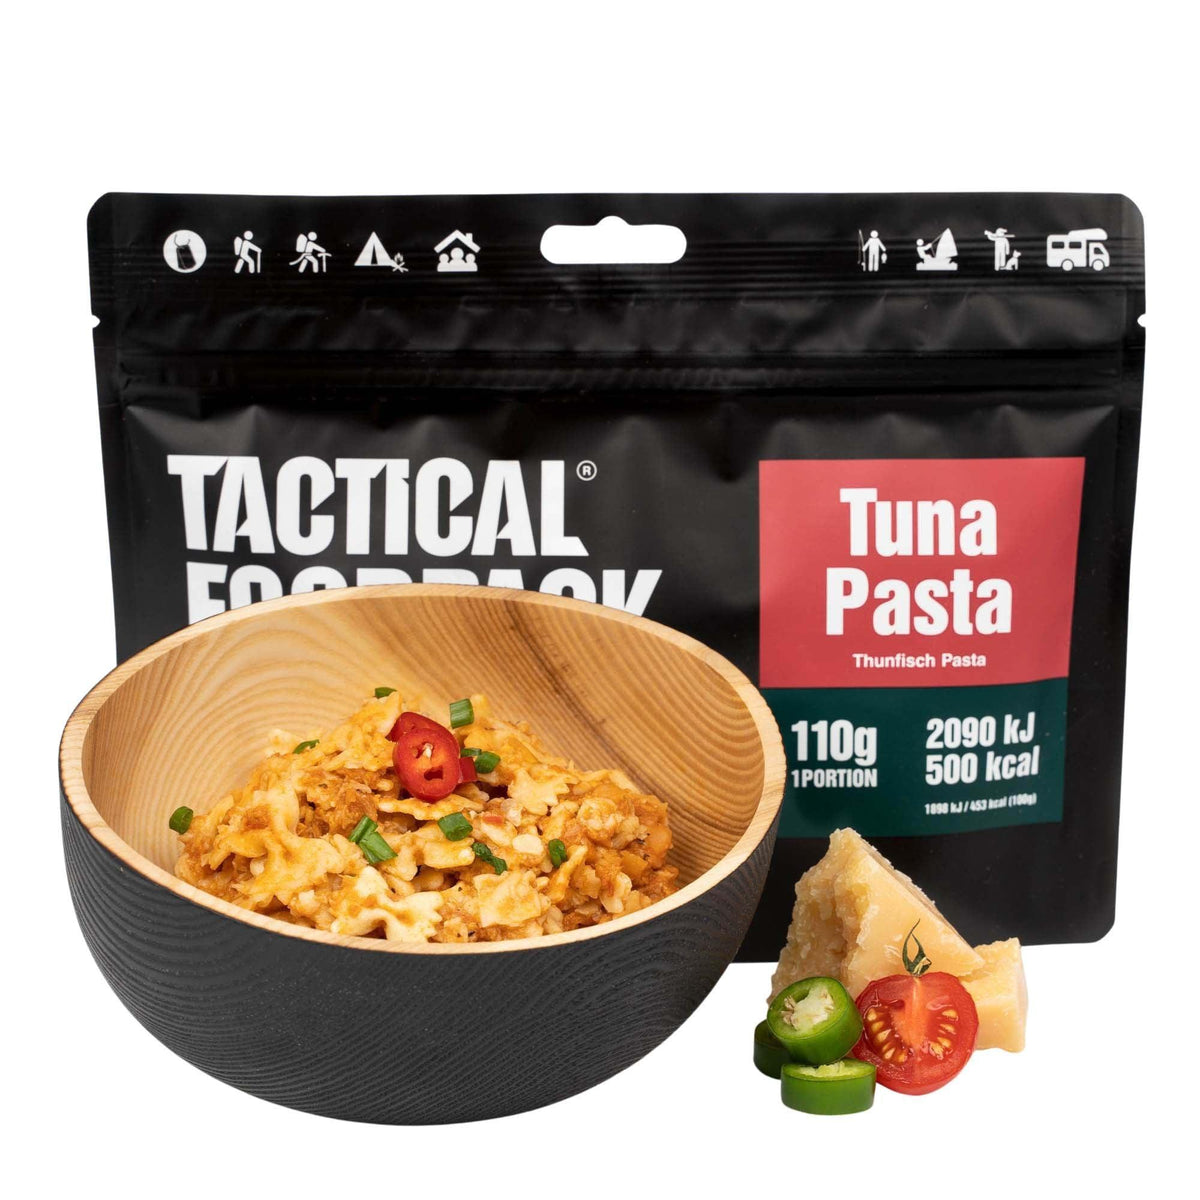 Tactical Foodpack Outdoornahrung | Thunfisch Pasta